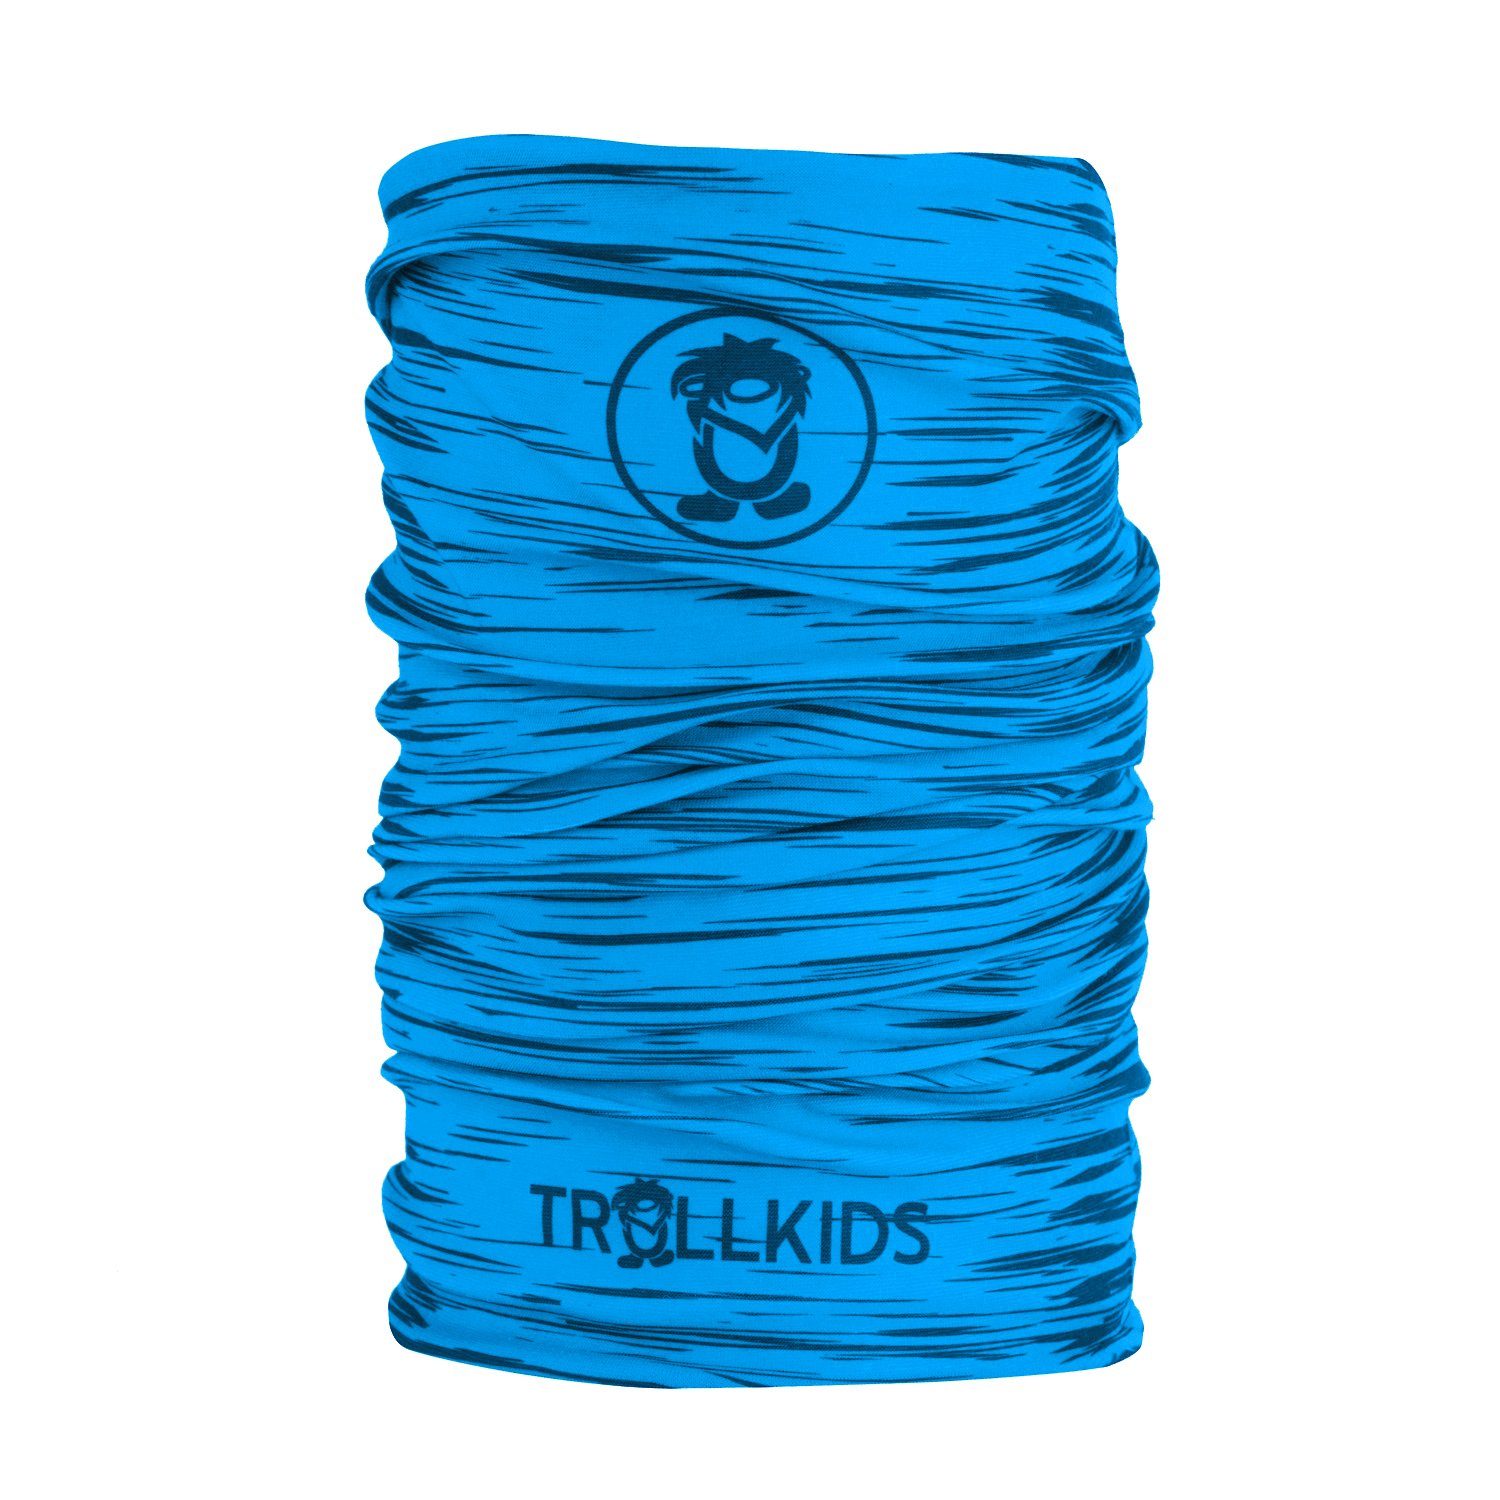 TROLLKIDS Multifunktionstuch Troll Marineblau/Mittelblau